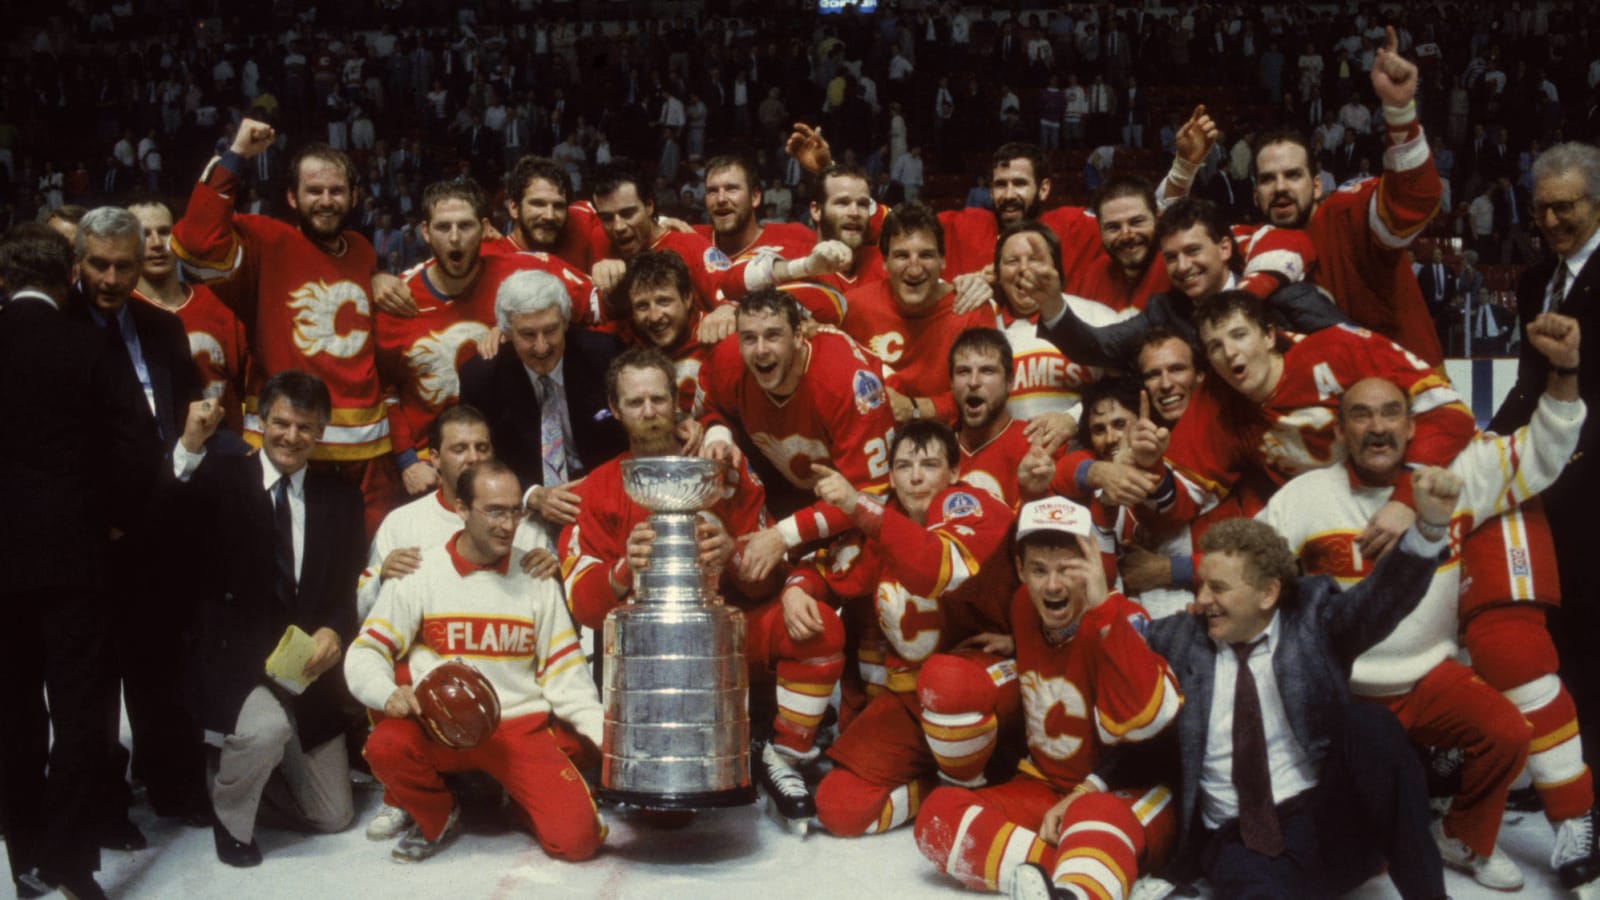 The '1988-89 Calgary Flames' quiz